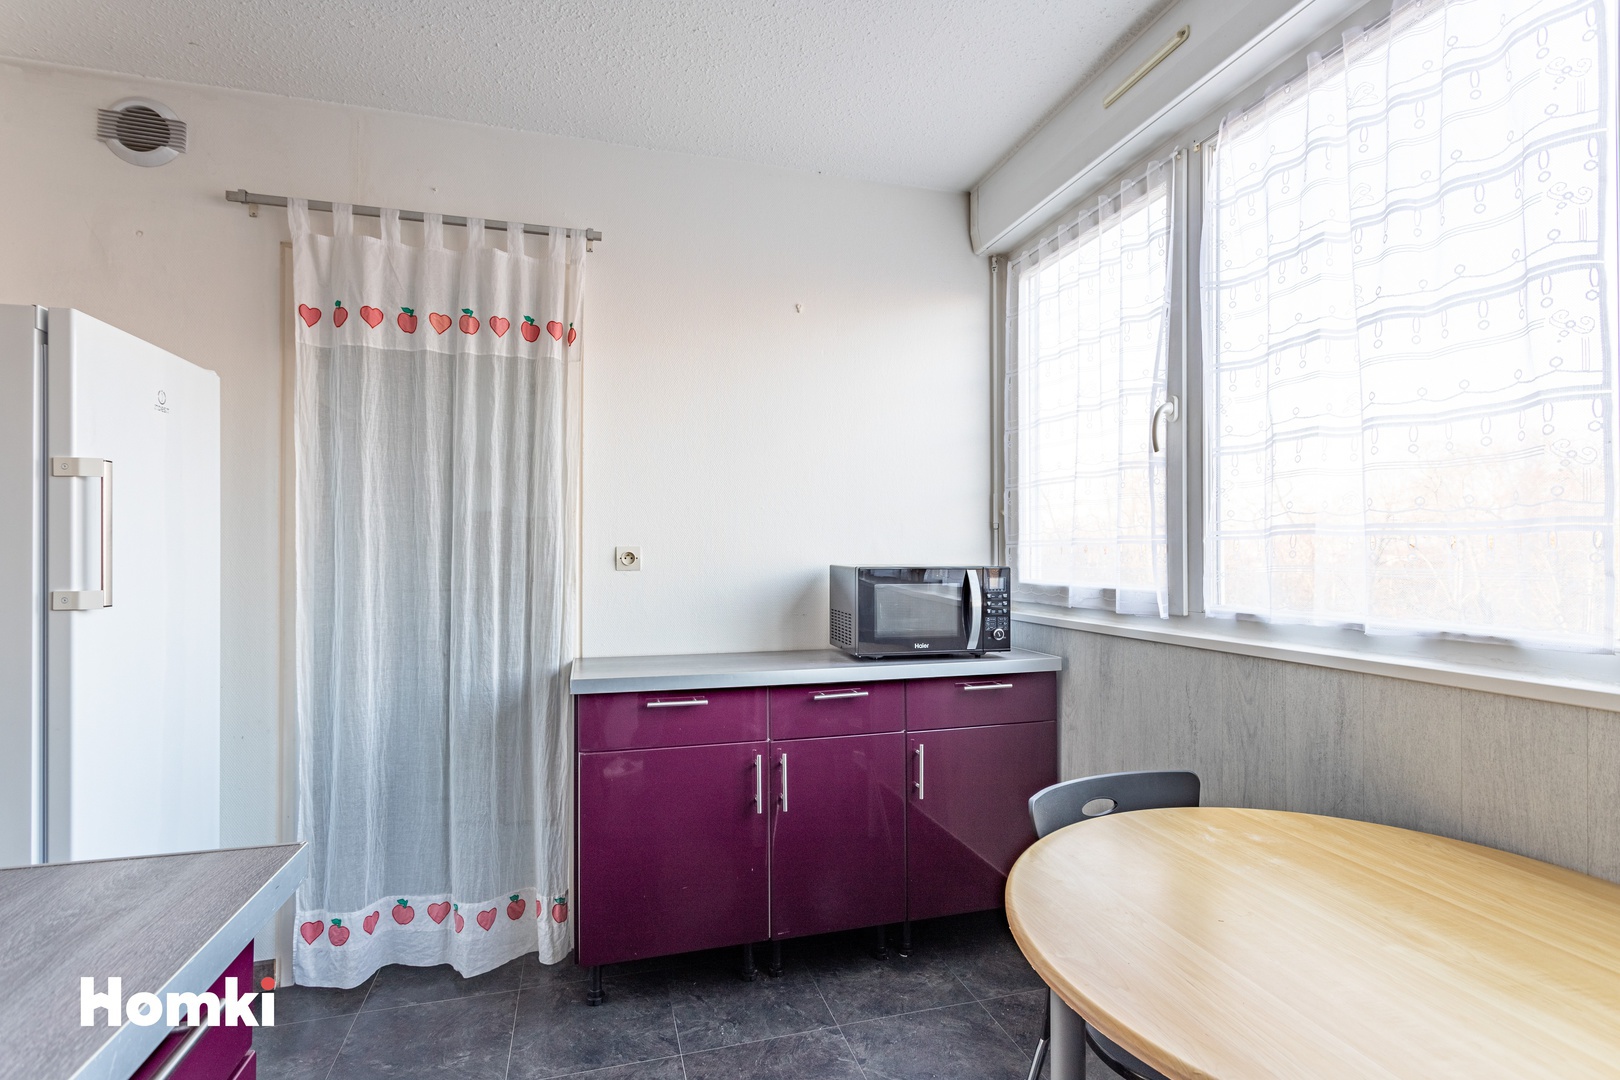 Homki - Vente Appartement  de 78.0 m² à Pessac 33600